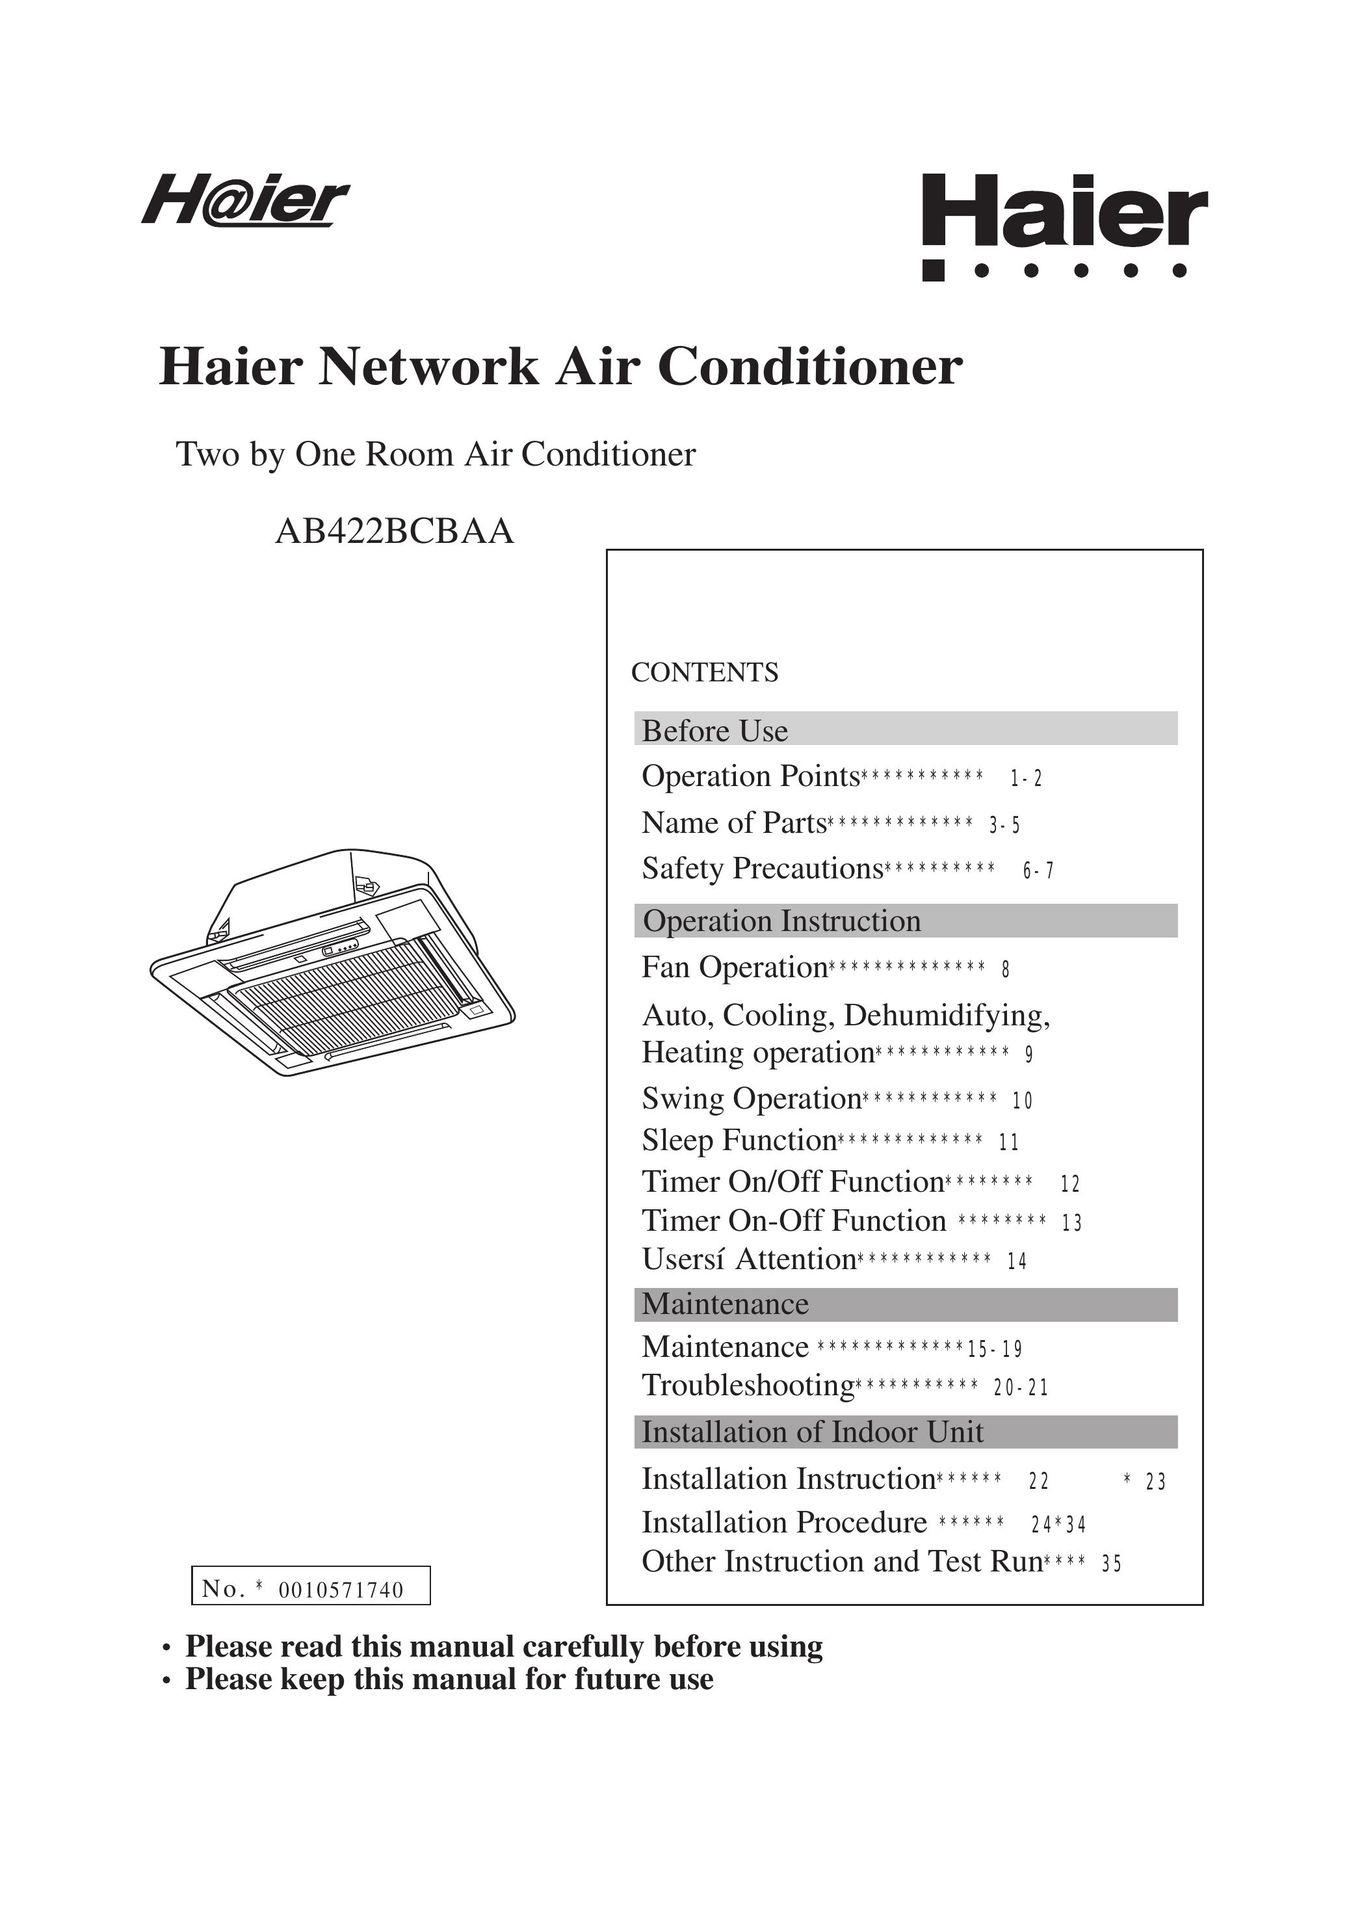 Haier AB422BCBAA Air Conditioner User Manual